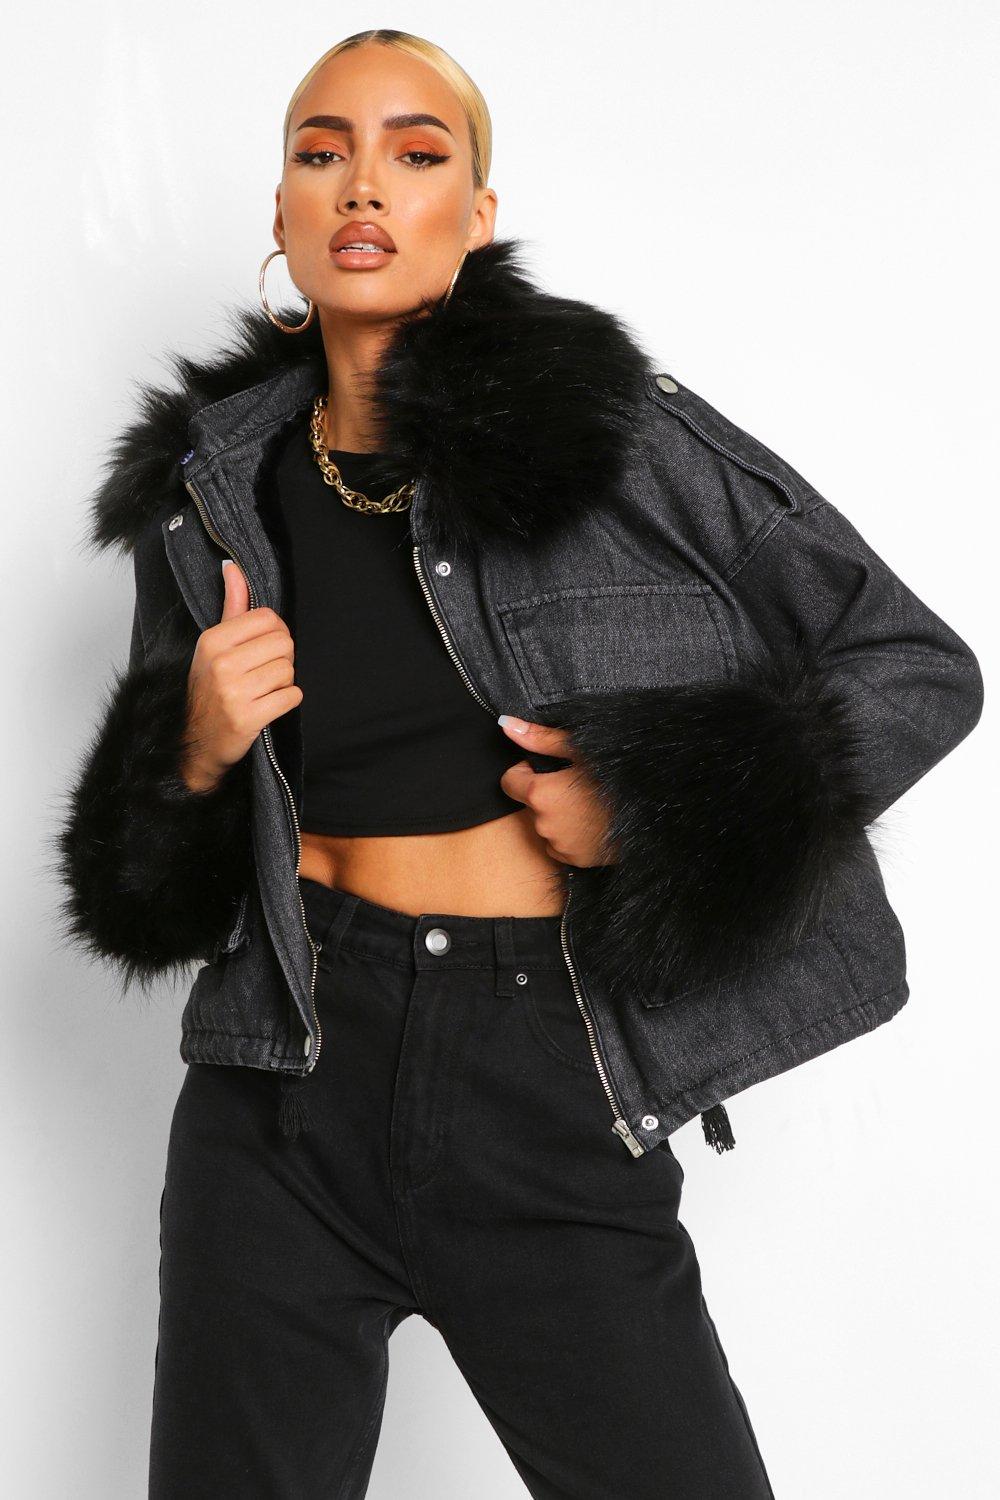 black denim jacket with fur collar